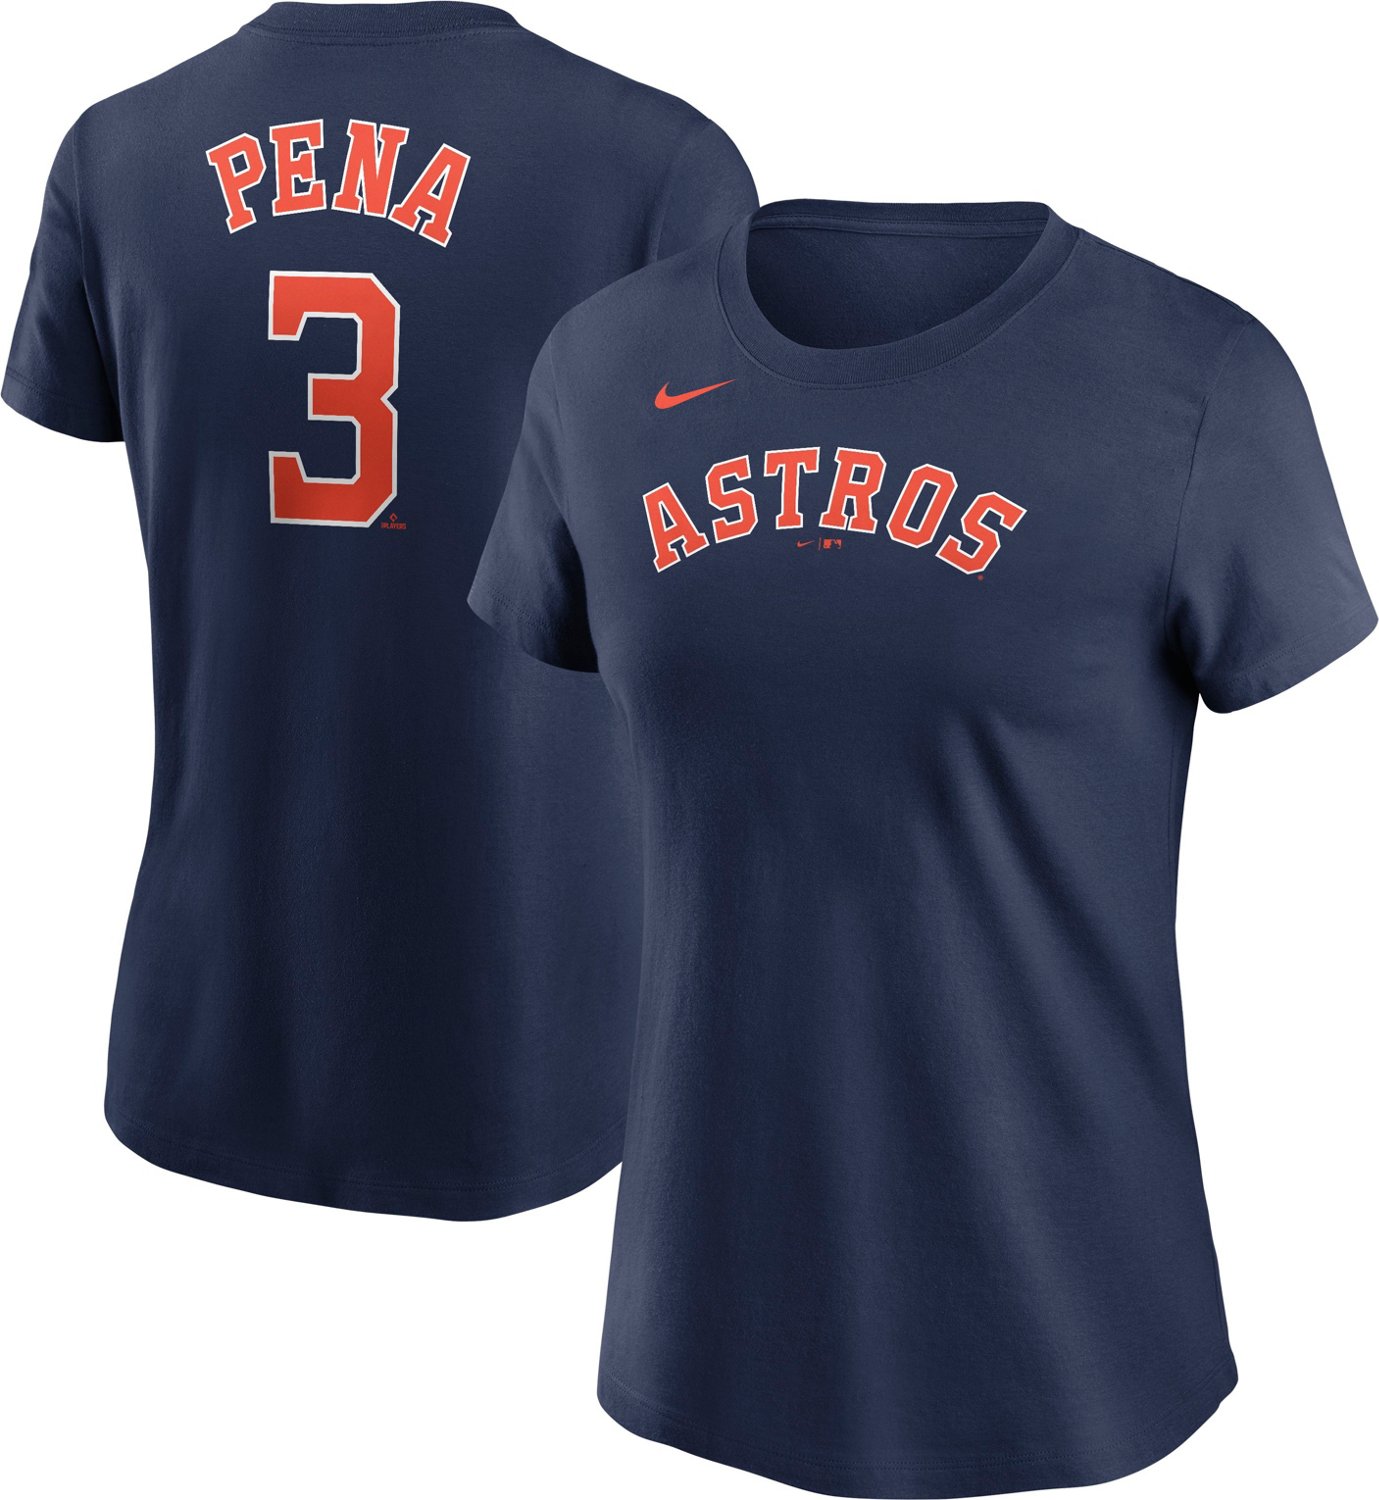 Womens Pinkerton Academy Astros V-Neck T-Shirt